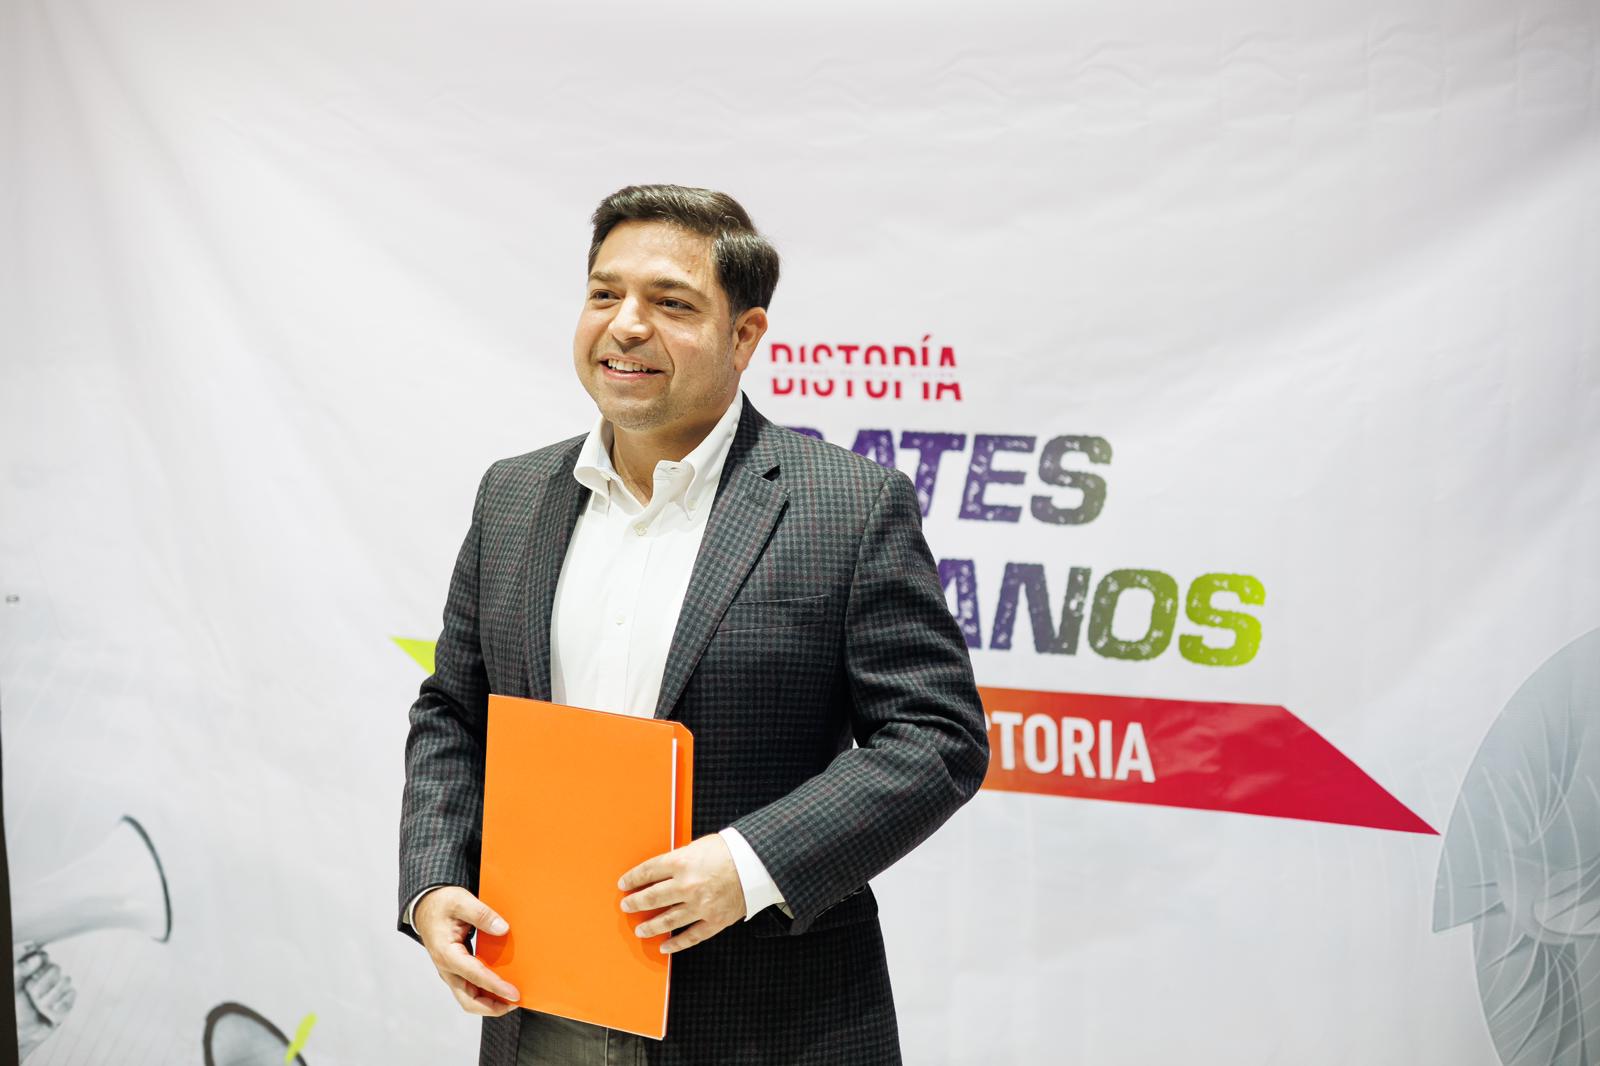 “Por primera vez van a tenerun buen presidente municipal” Luis Torre